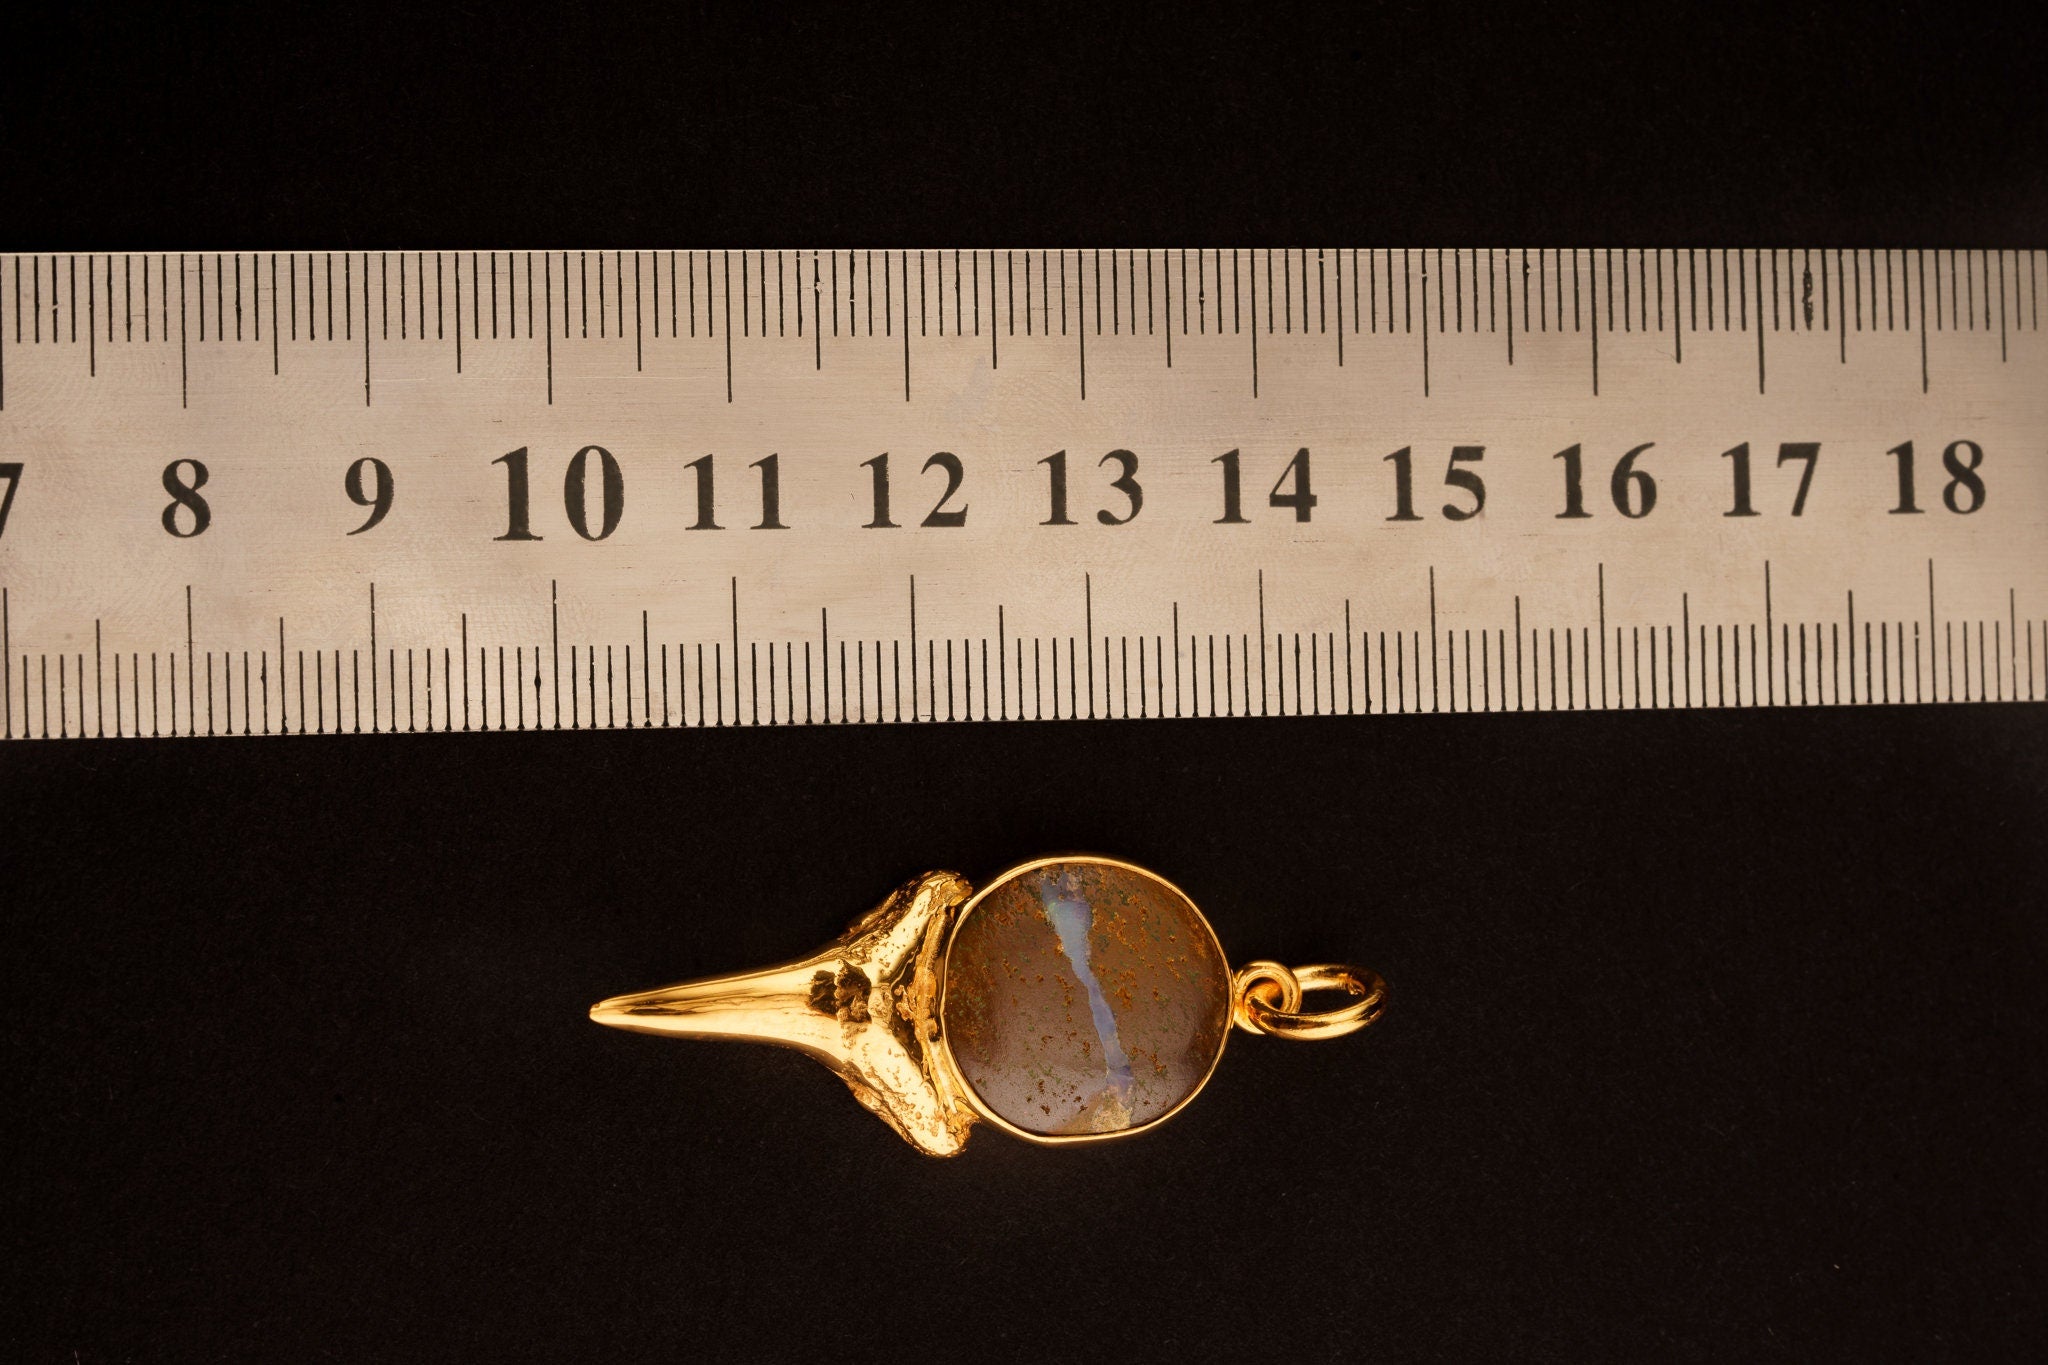 Megalodon Shark Tooth Gold plated Brass Cast - 925 Sterling Silver Set - Australian Boulder OpalCabochon - Pendant Neckpiece